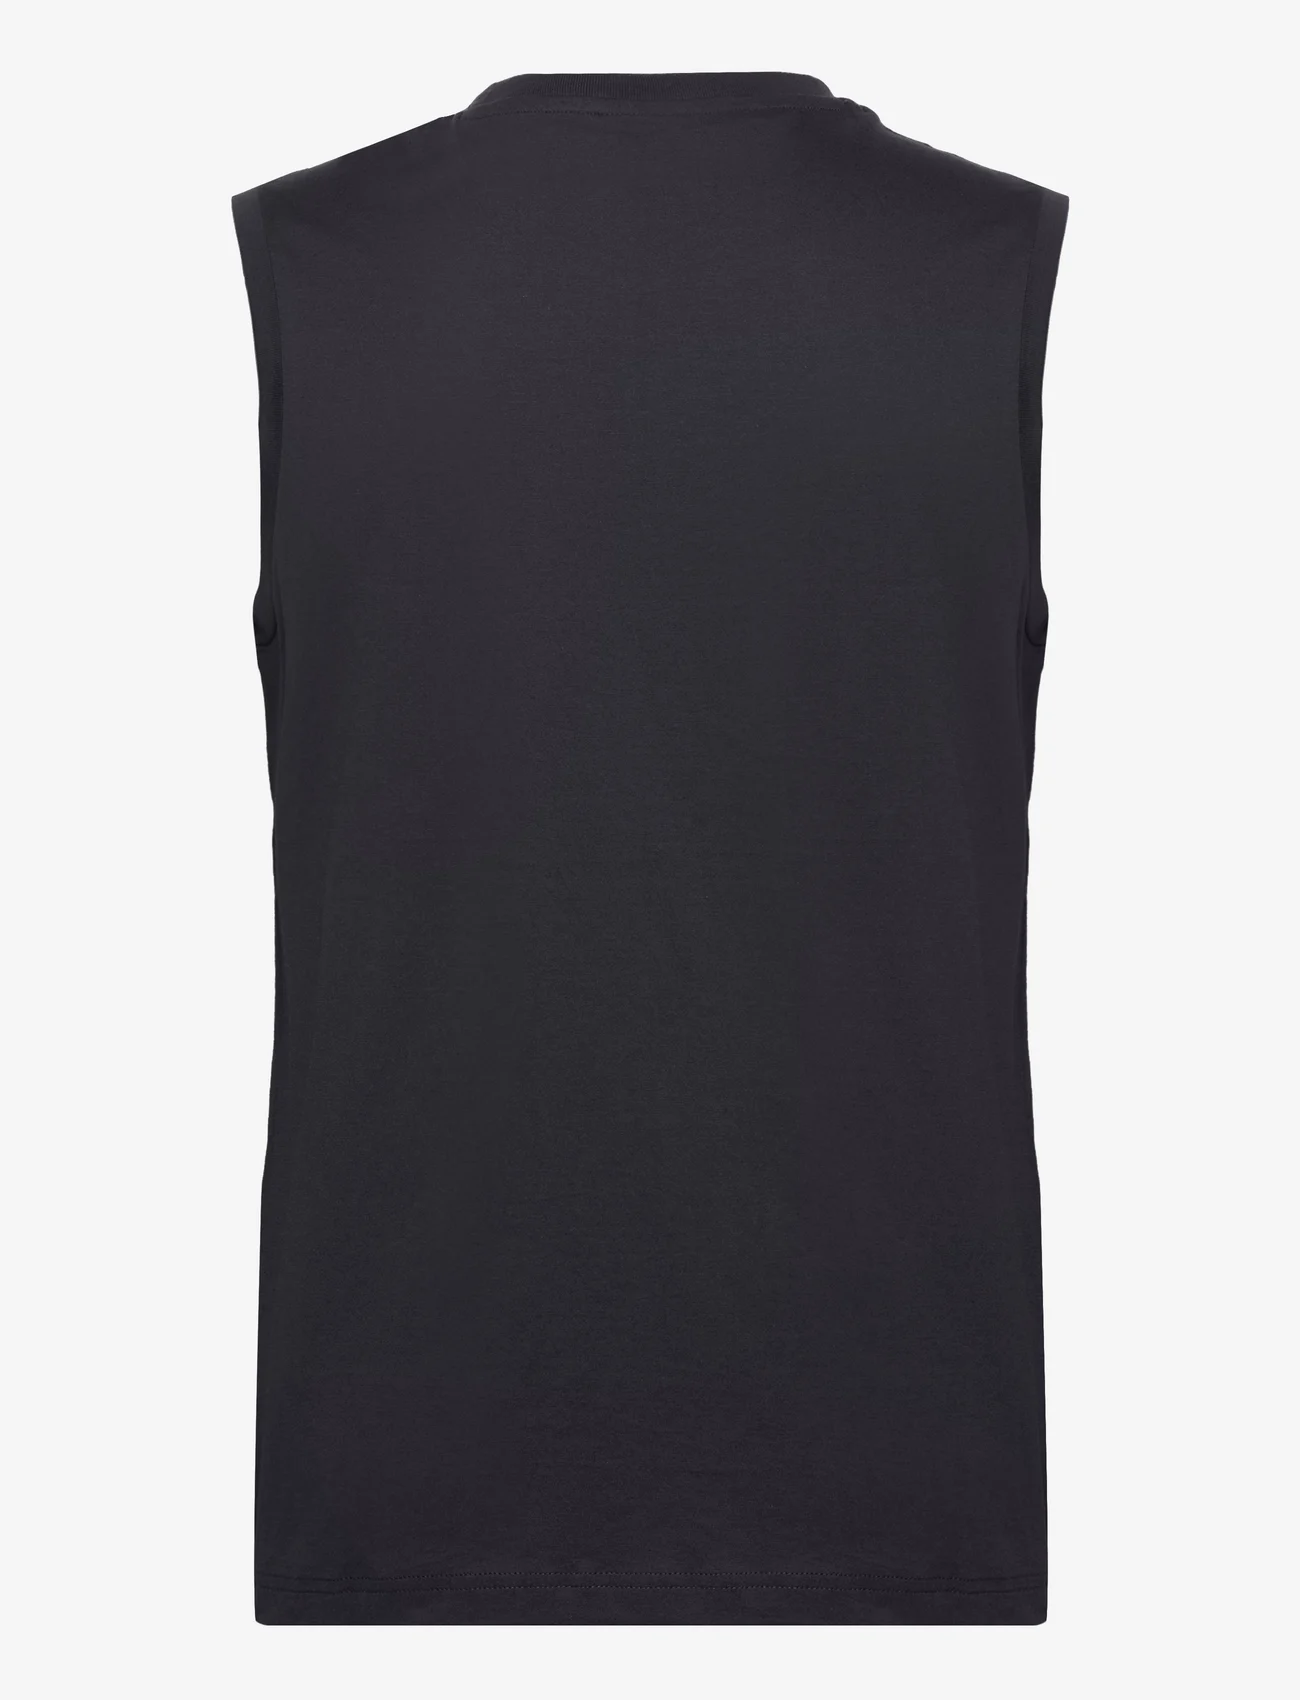 Champion - Sleeveless Crewneck T-Shirt - lowest prices - black beauty - 1